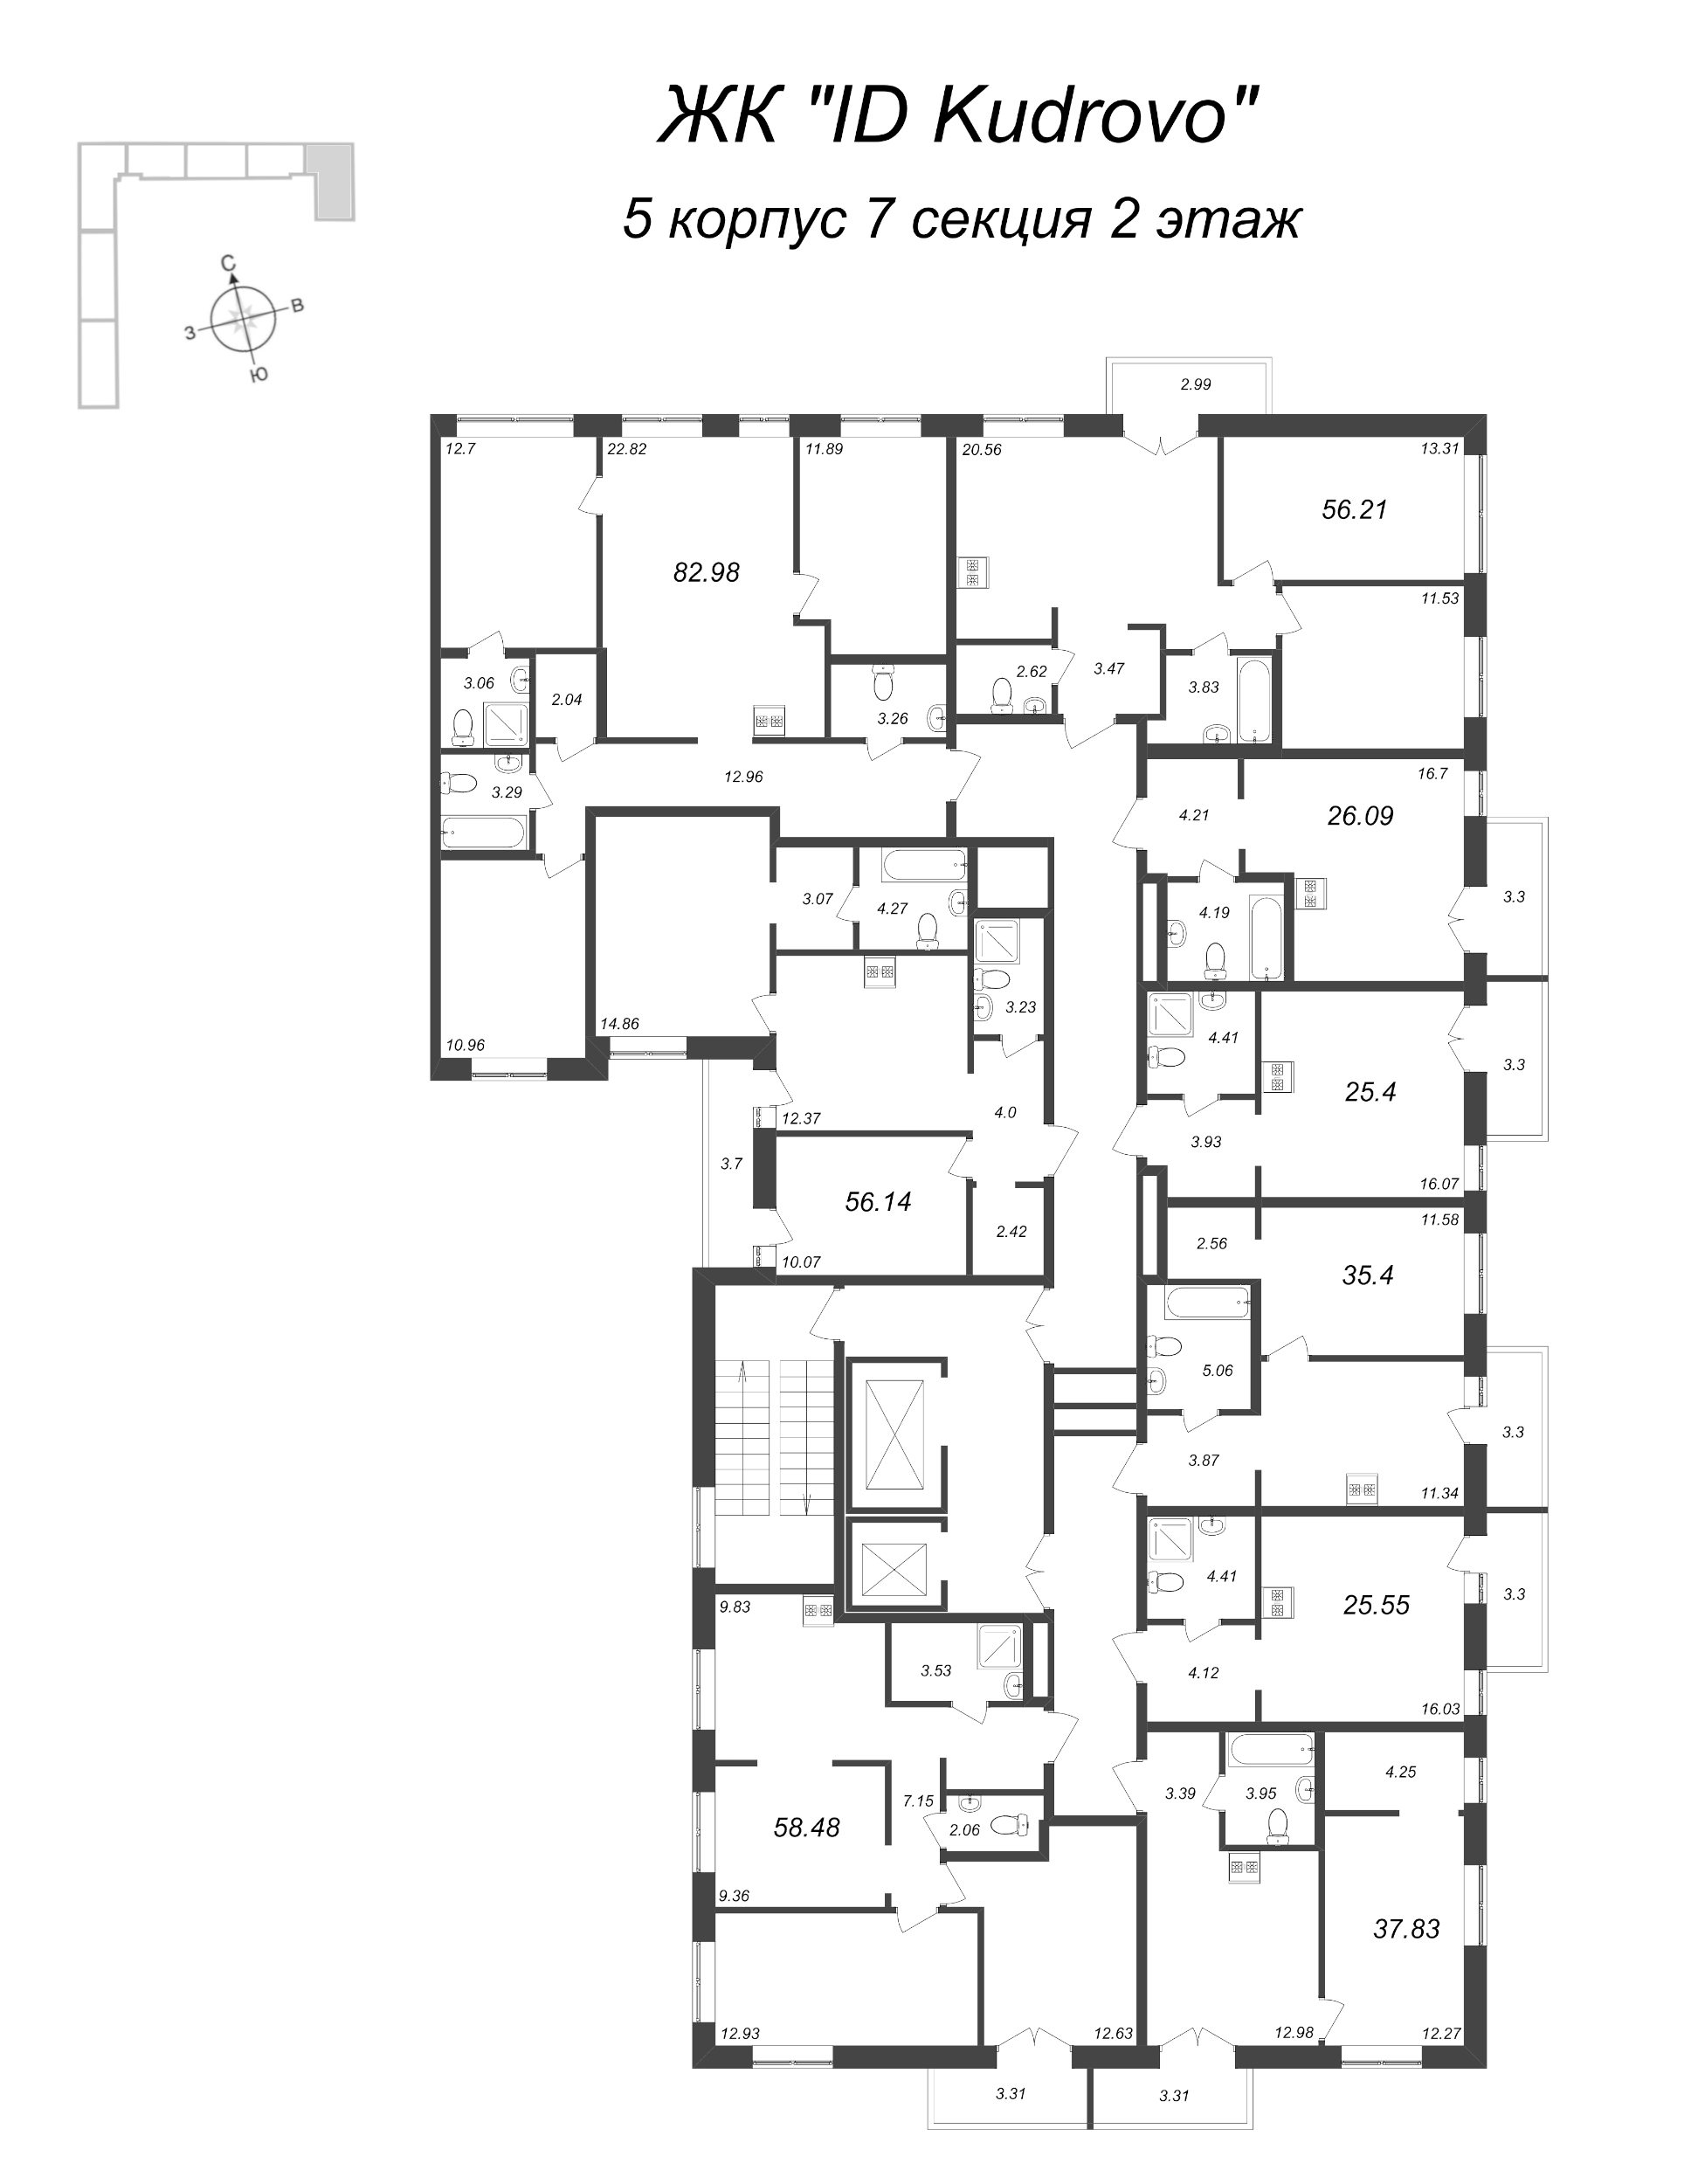 4-комнатная (Евро) квартира, 82.98 м² - планировка этажа